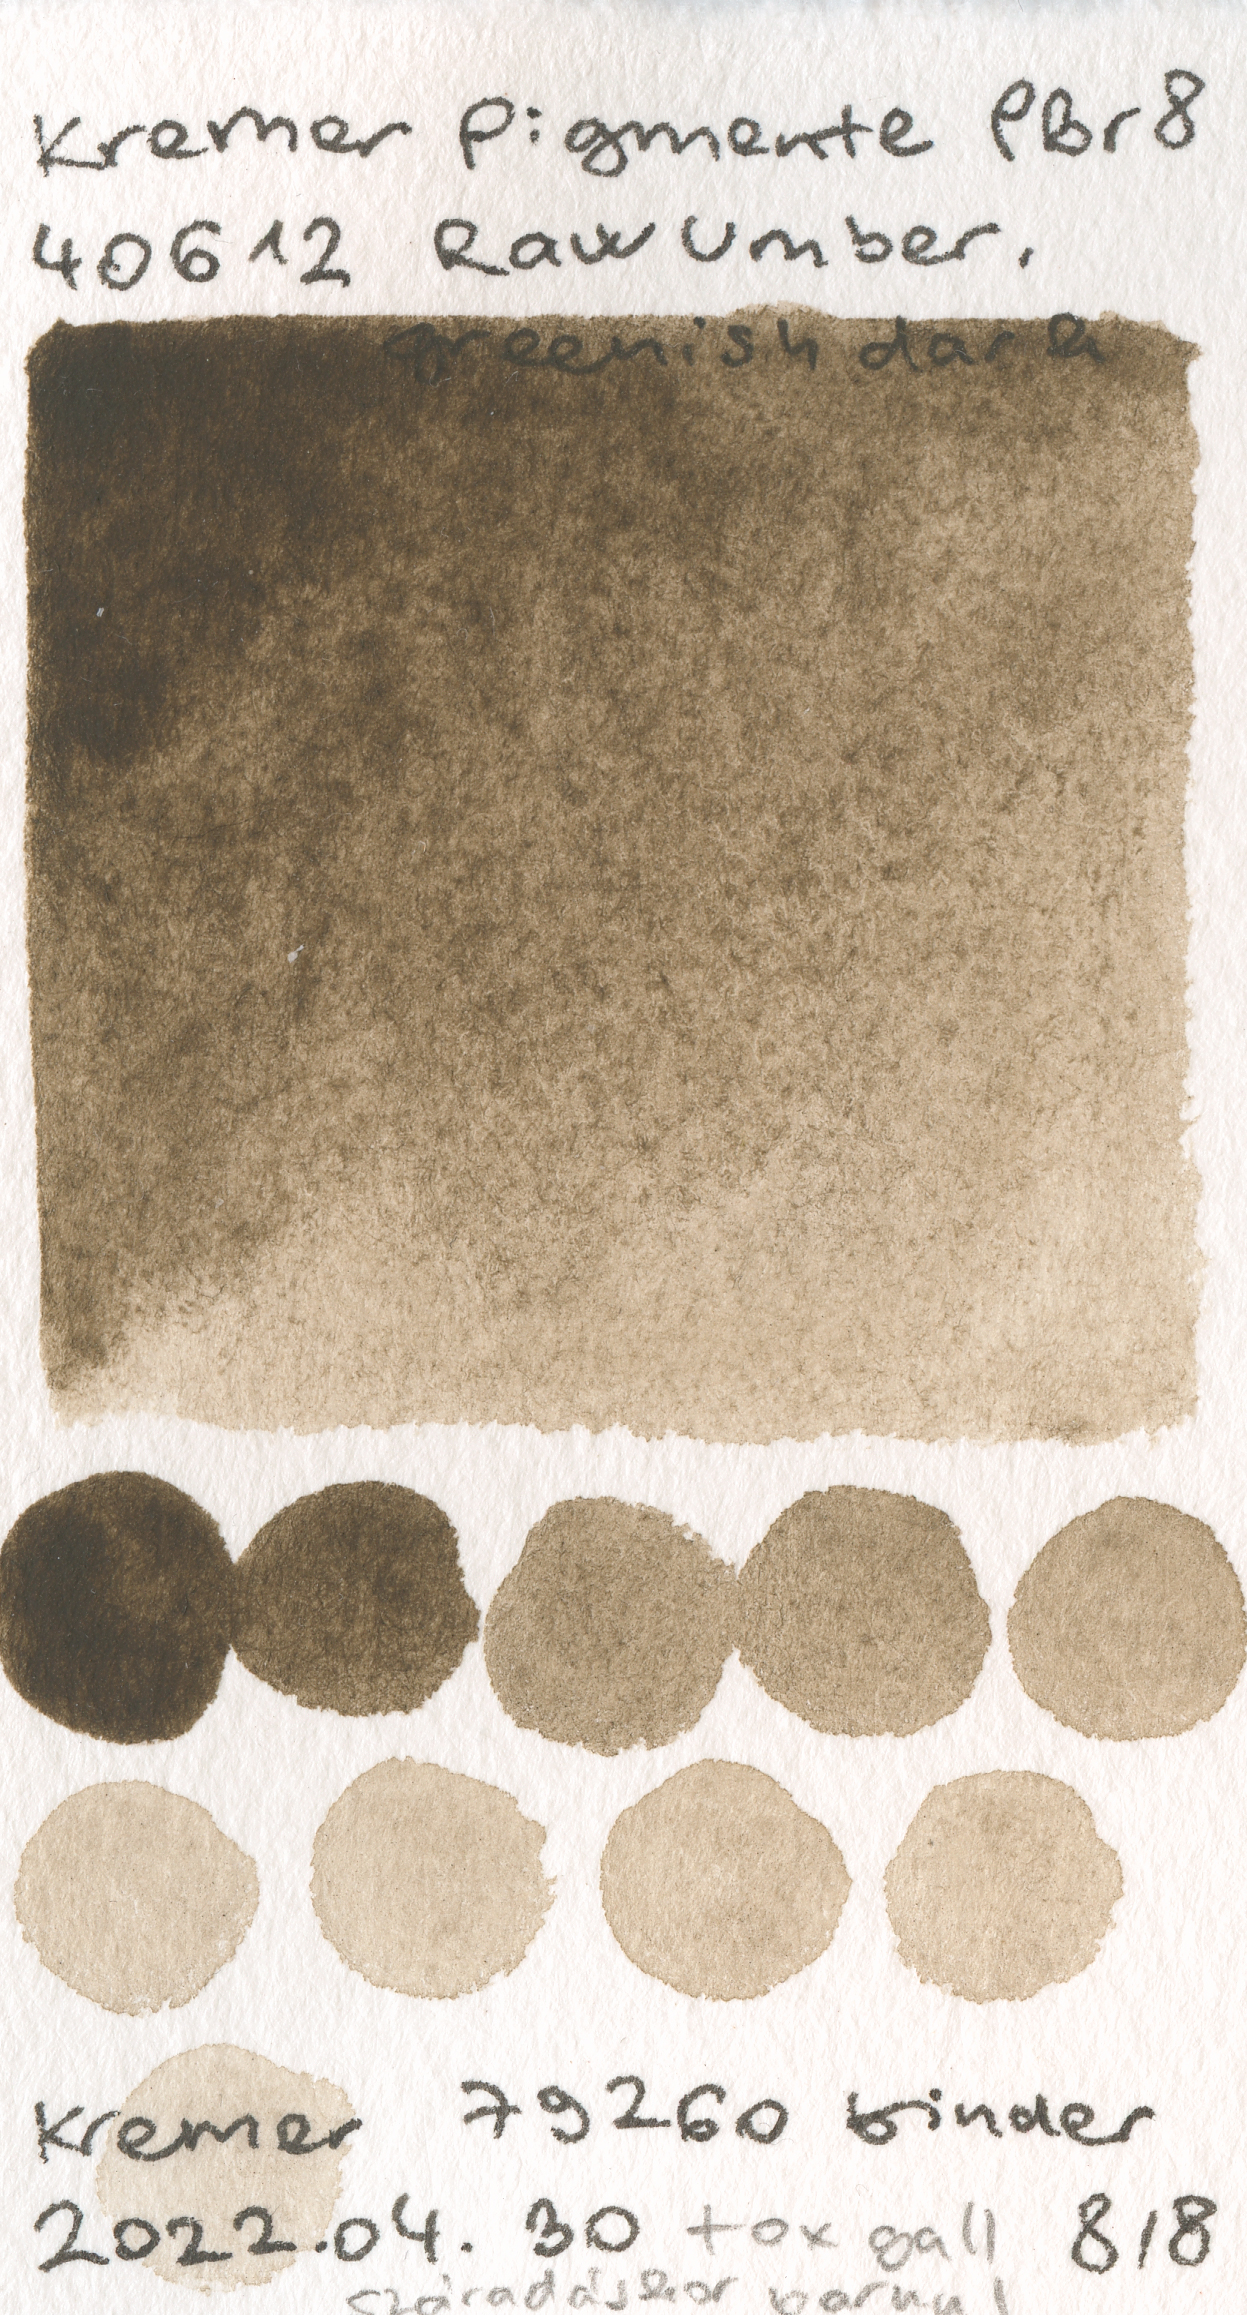 Kremer Pigmente [Dry] Pigments 40612 Raw Umber PBr8 watercolor swatch